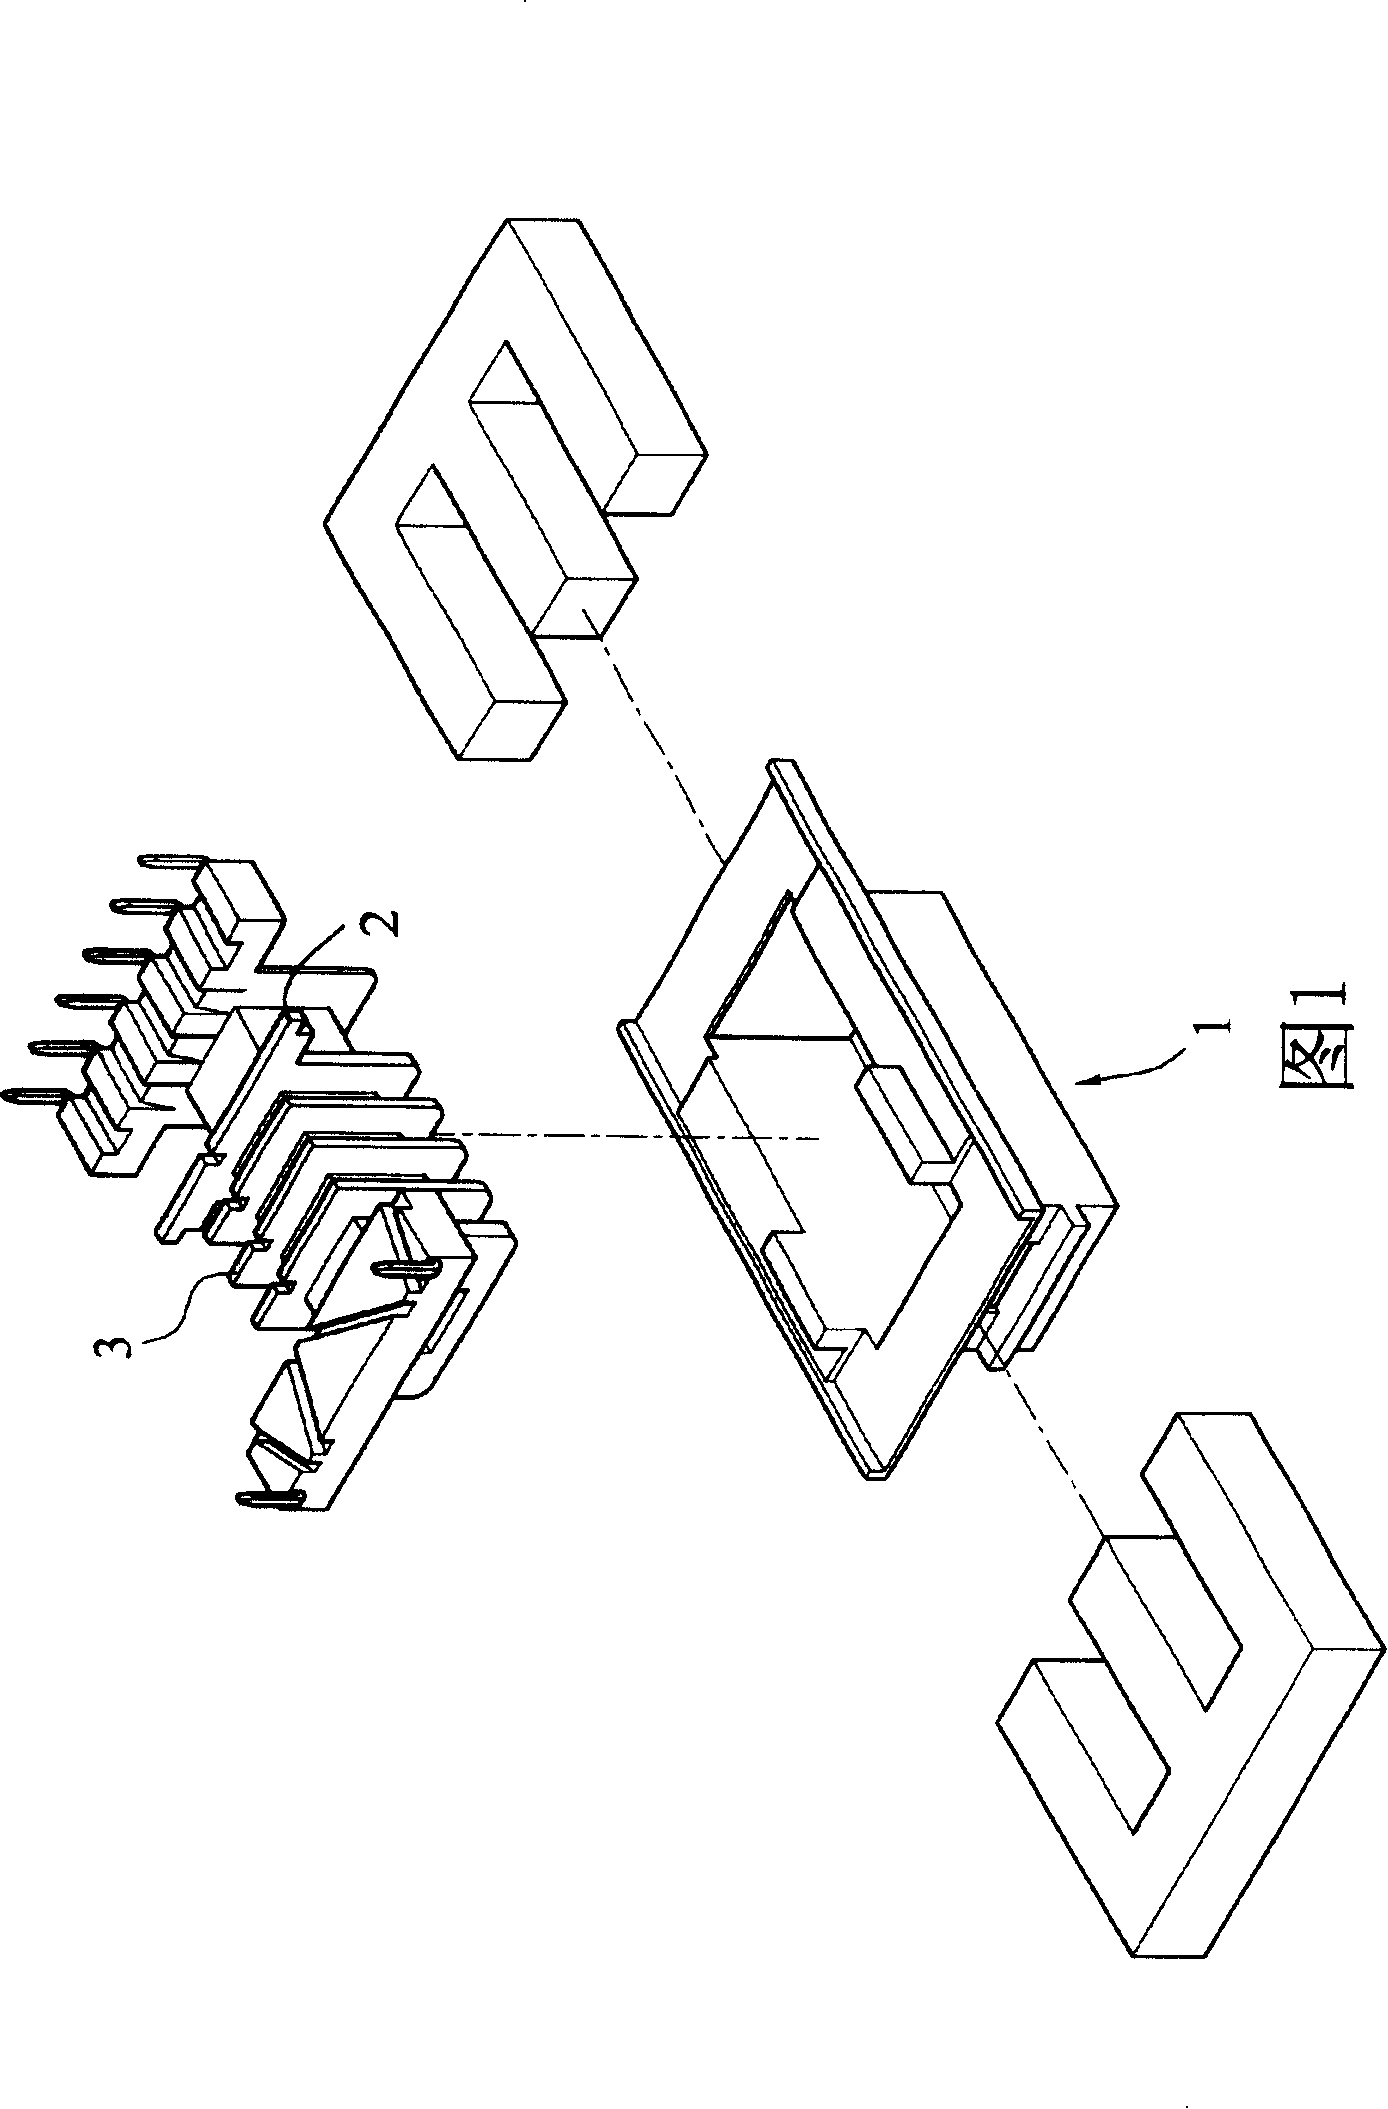 Bobbin bracket structure of transformer